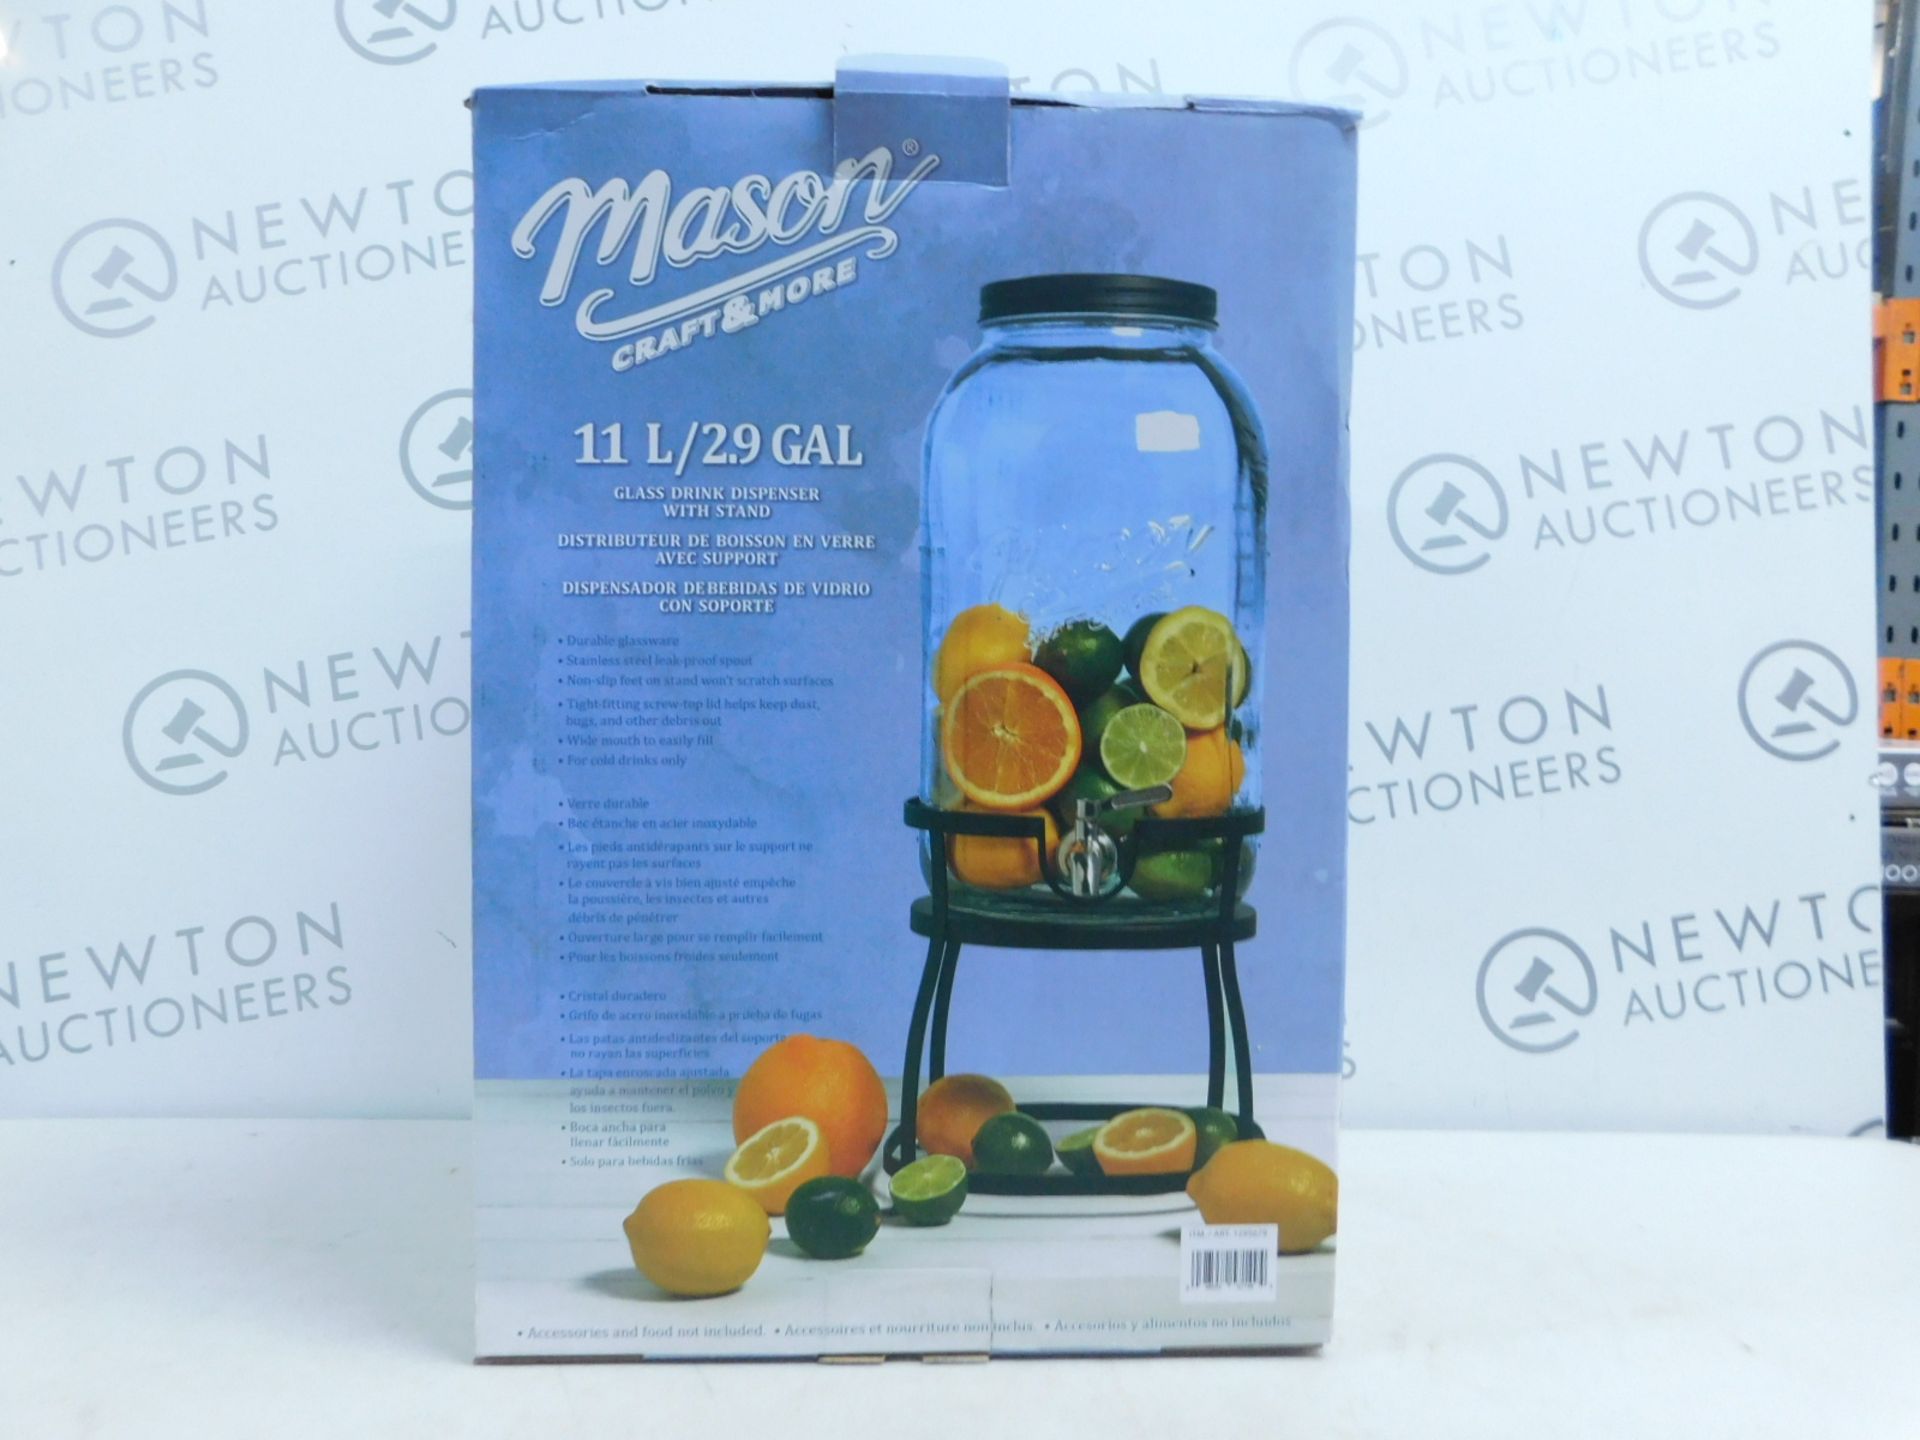 1 BOXED AMERICANA MASON CRAFT & MORE 11L GLASS DRINKS DISPENSER RRP Â£49.99